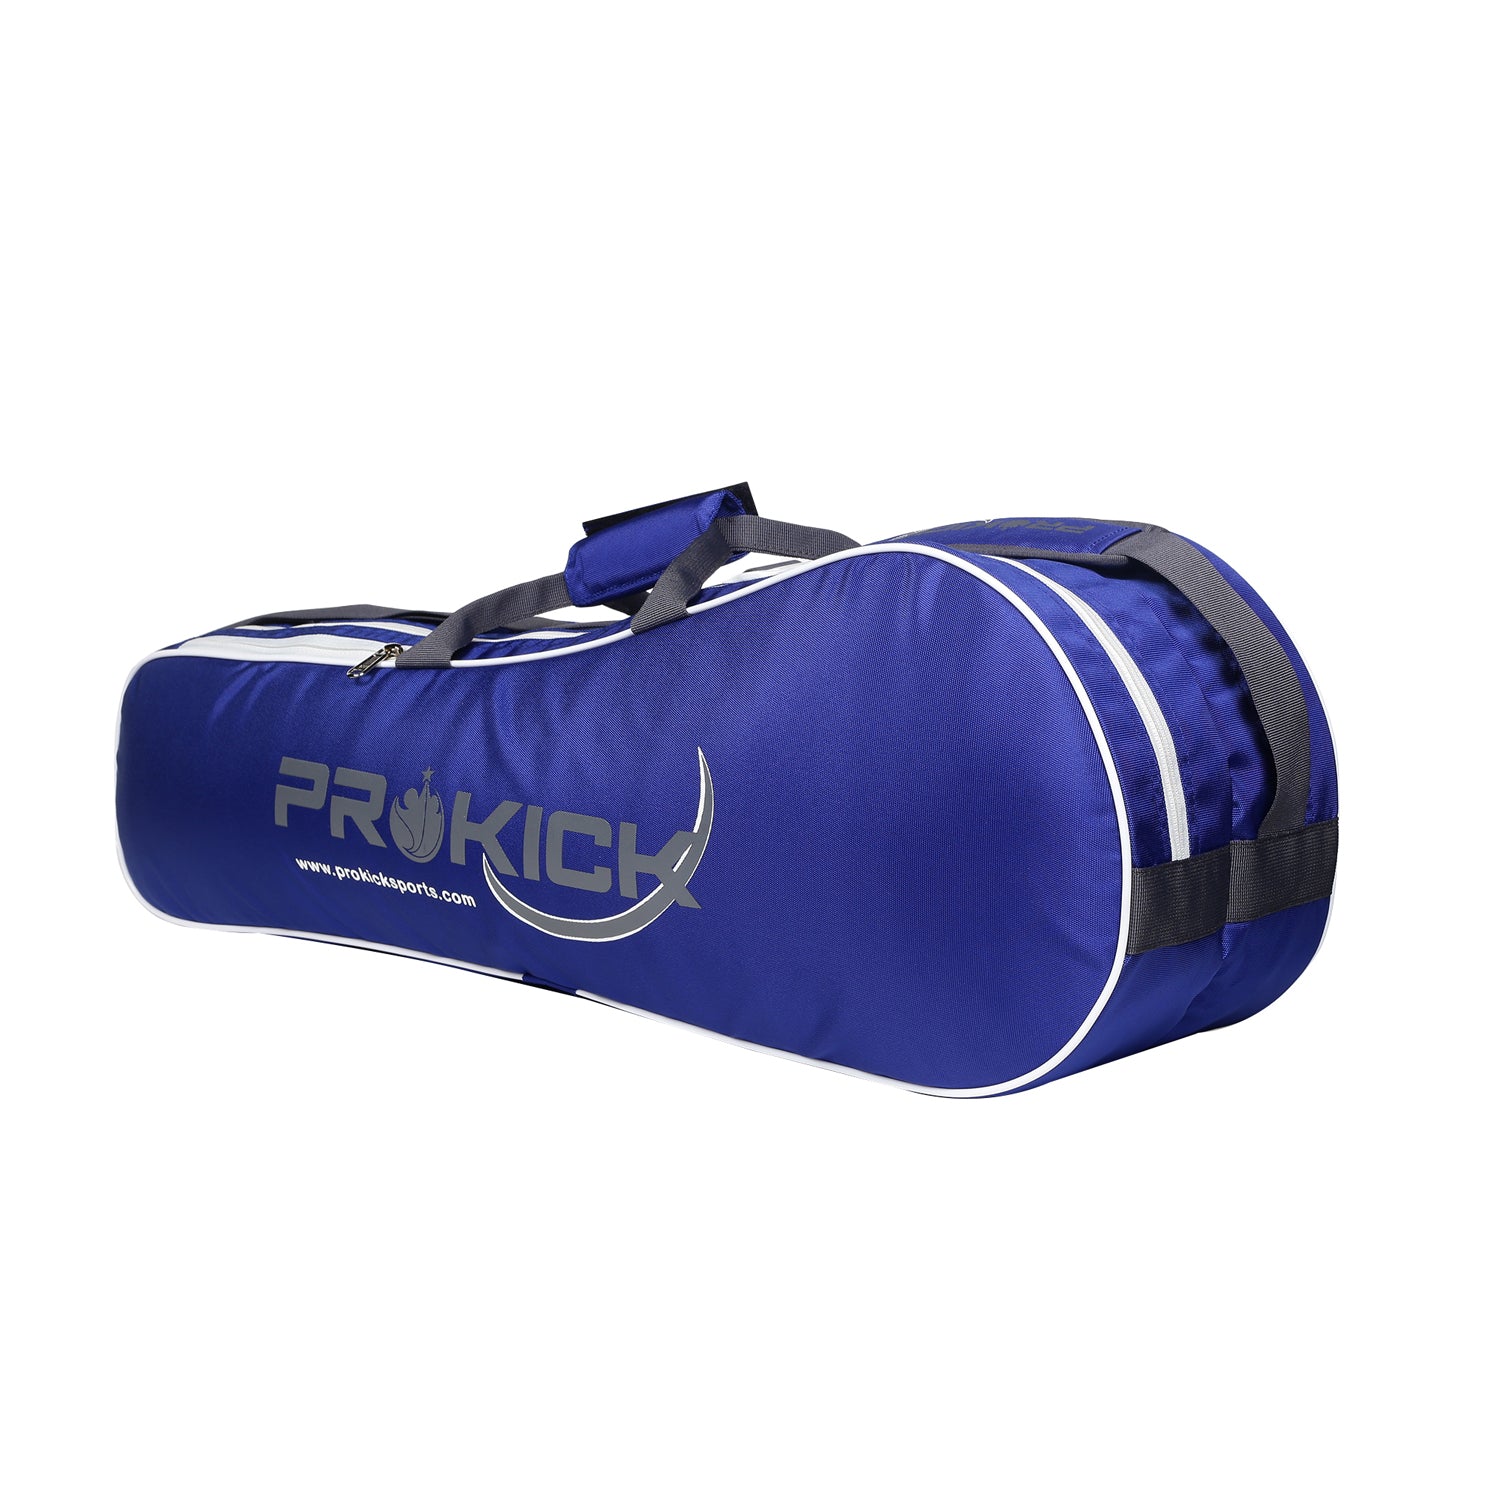 Prokick Legend Badminton Kitbag with Double Zipper Compartments - Best Price online Prokicksports.com